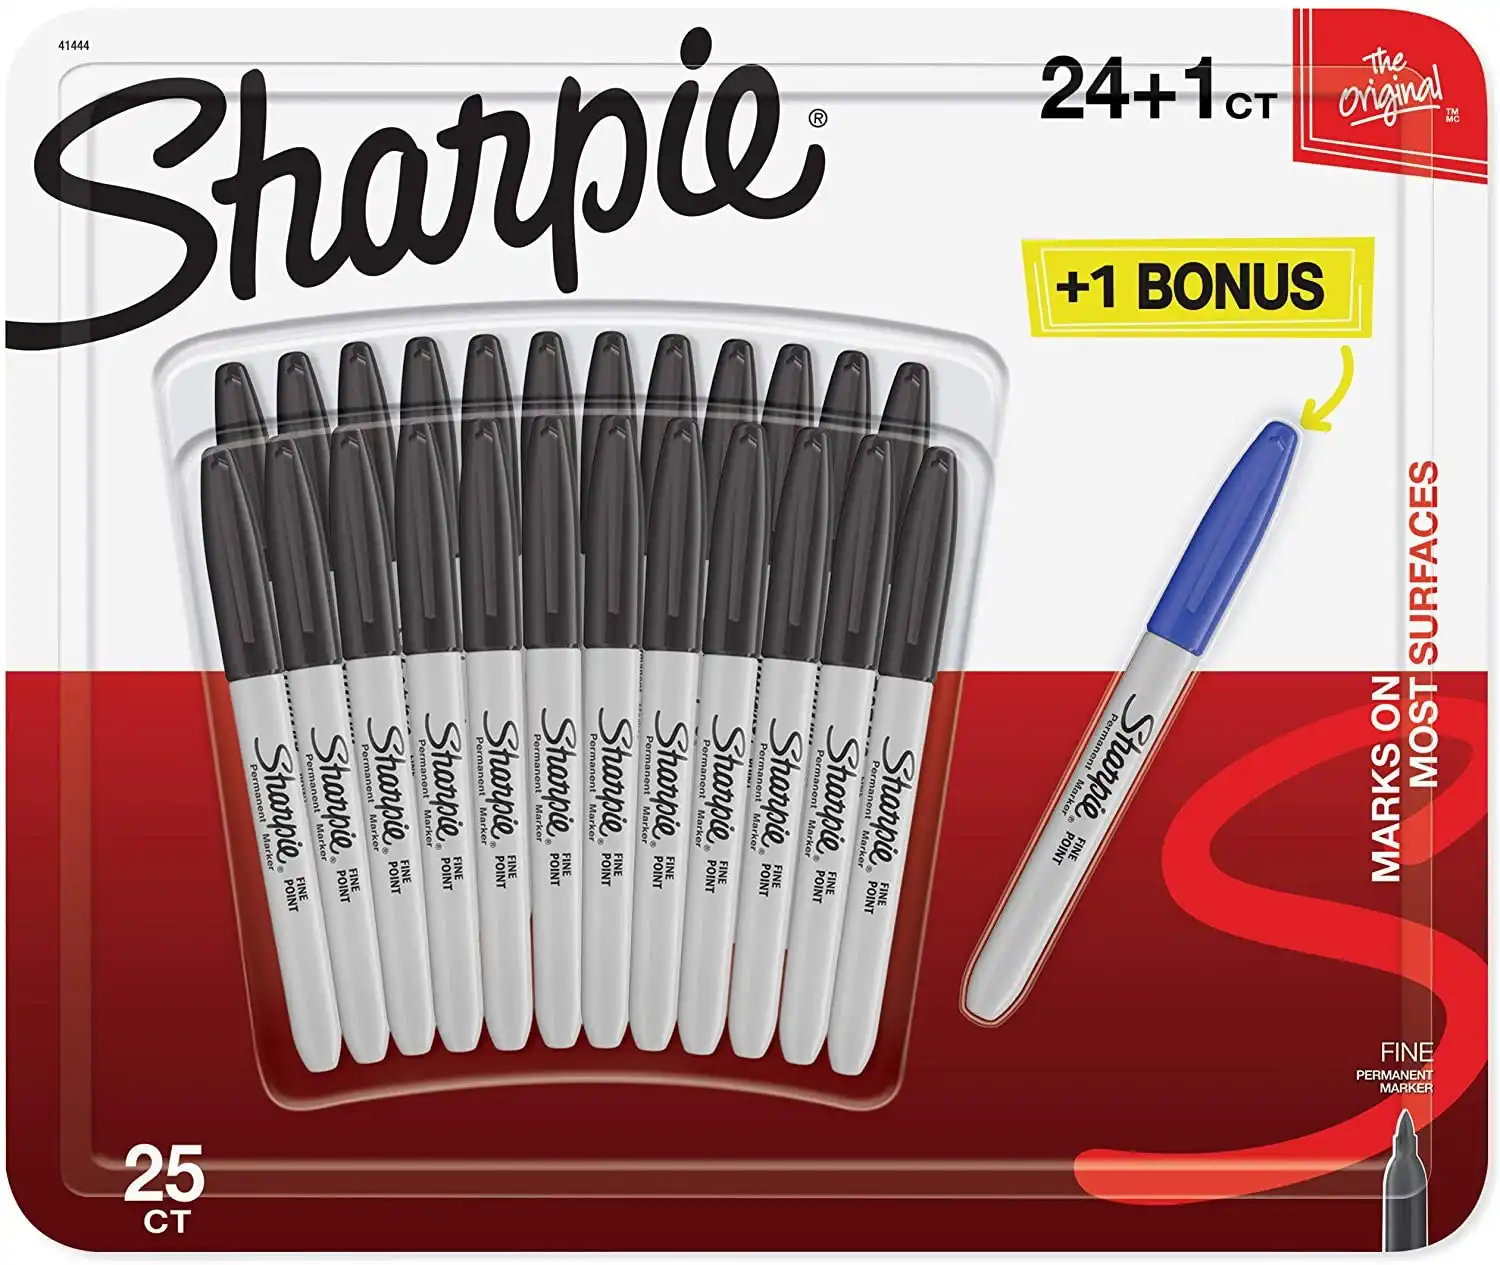 Sharpie Black Permanent Fine Markers 24 Pack +1